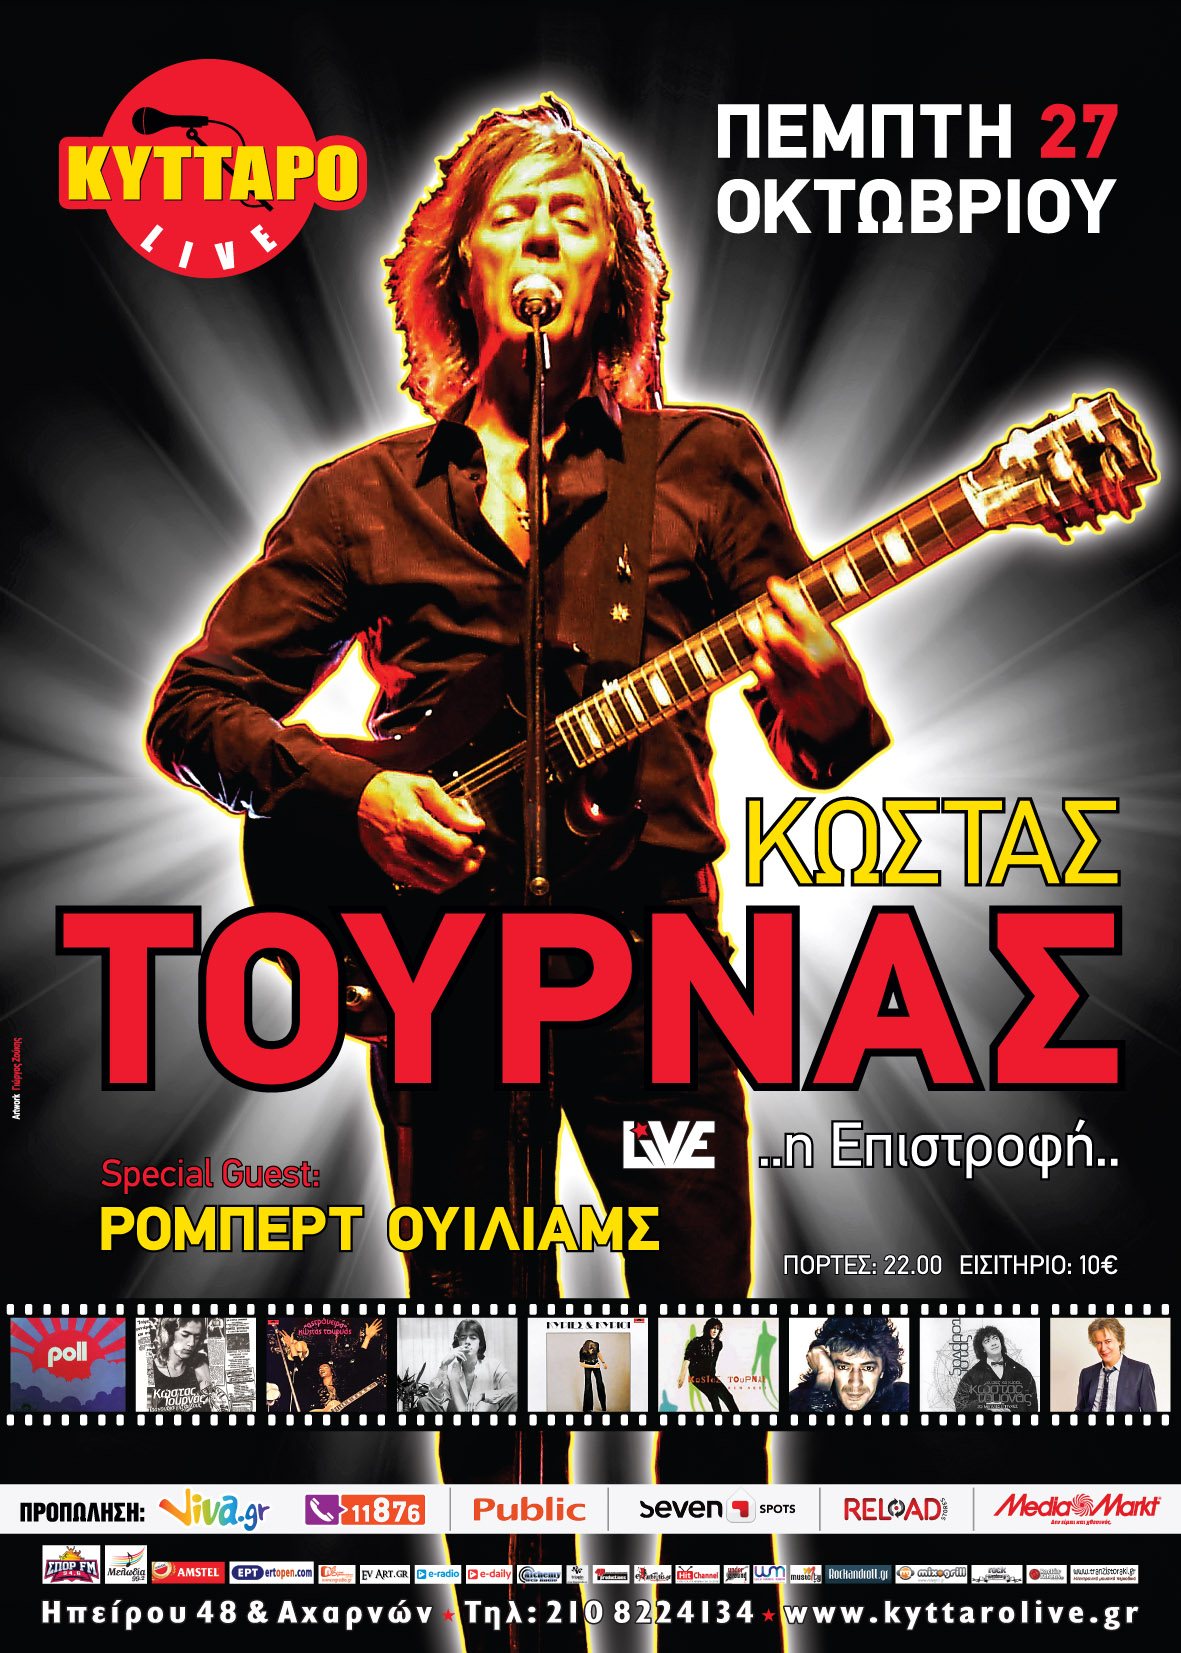 Kyttaro Tournas_1.cdr